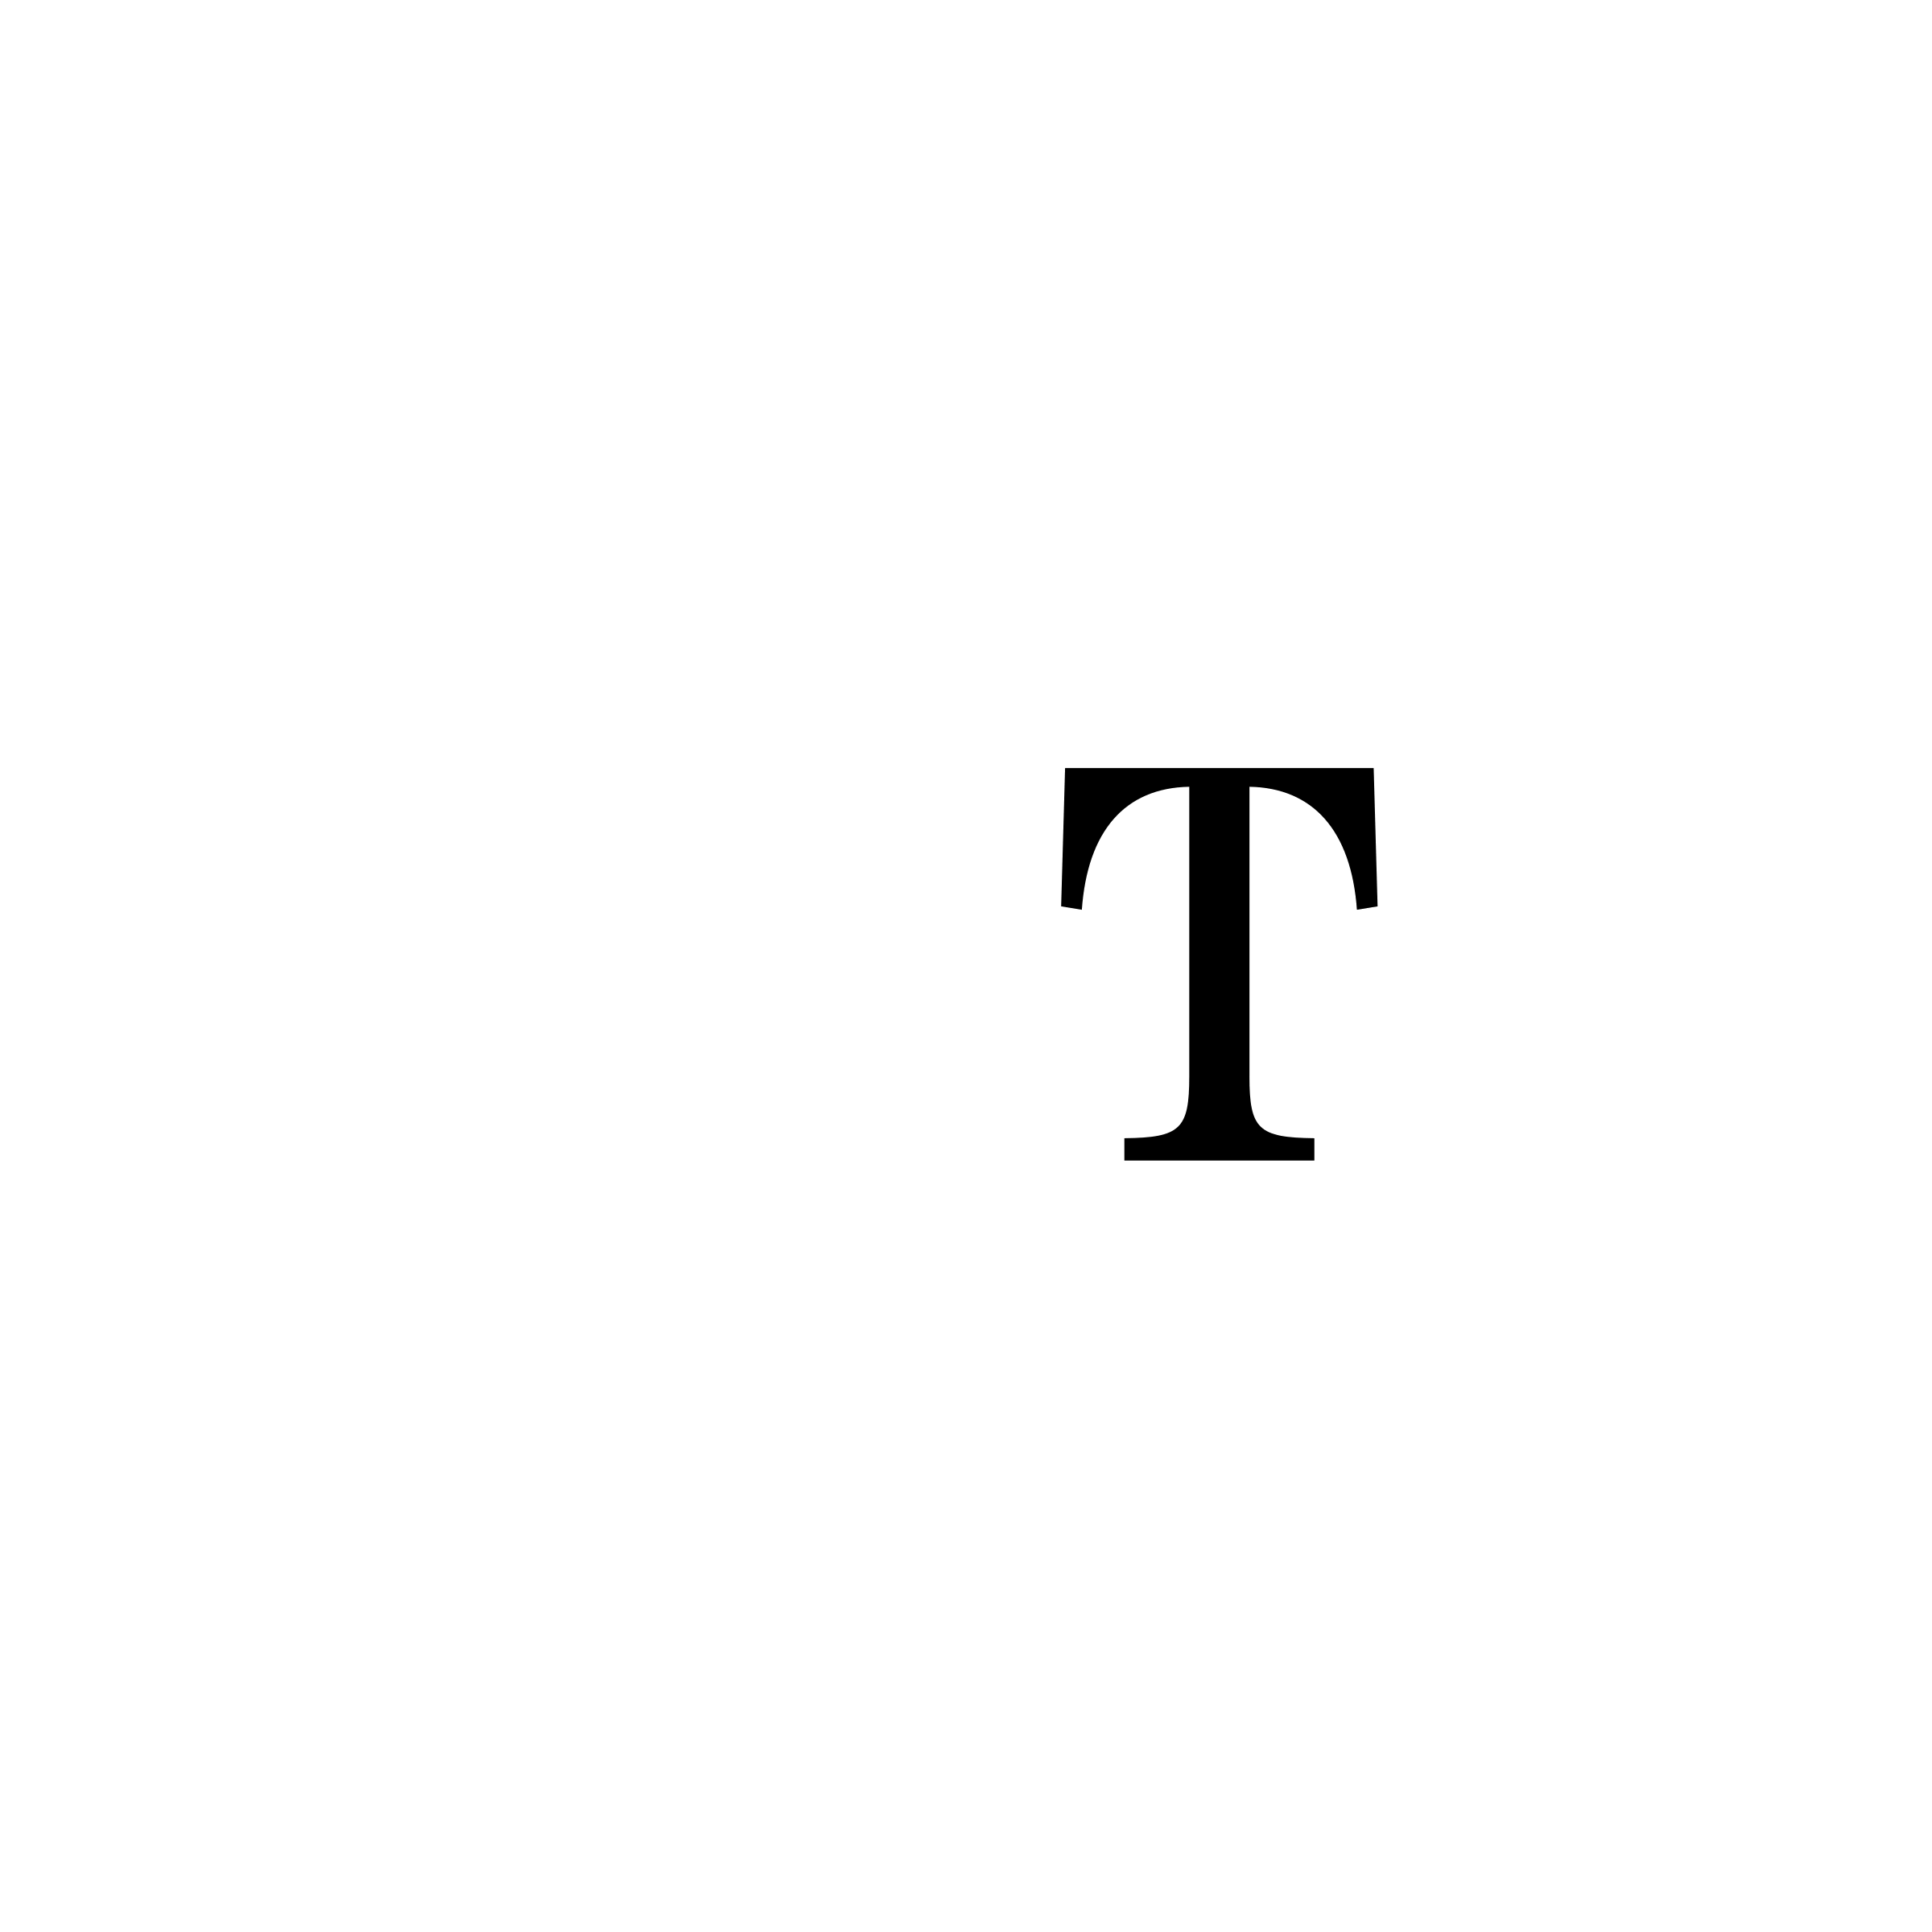 Deutsche Telekom Logo - Deutsche Telekom Logo PNG Transparent & SVG Vector - Freebie Supply